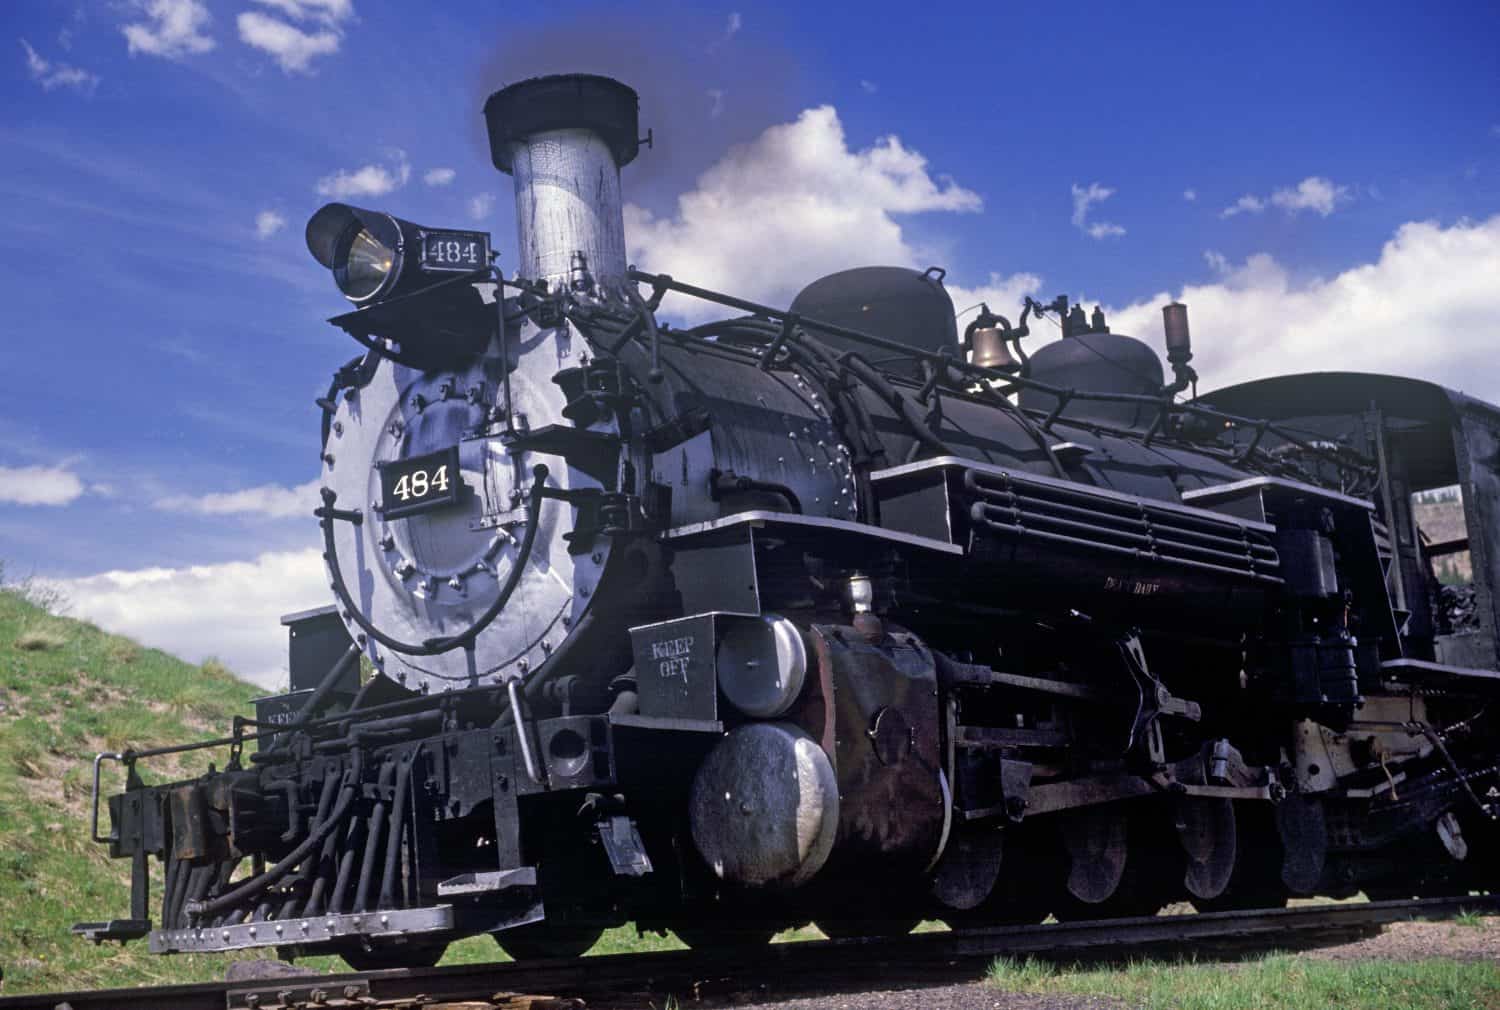 The Cumbres and Toltec Scenic Railroad traveling from Chama, New Mexico to Antonio, Colorado